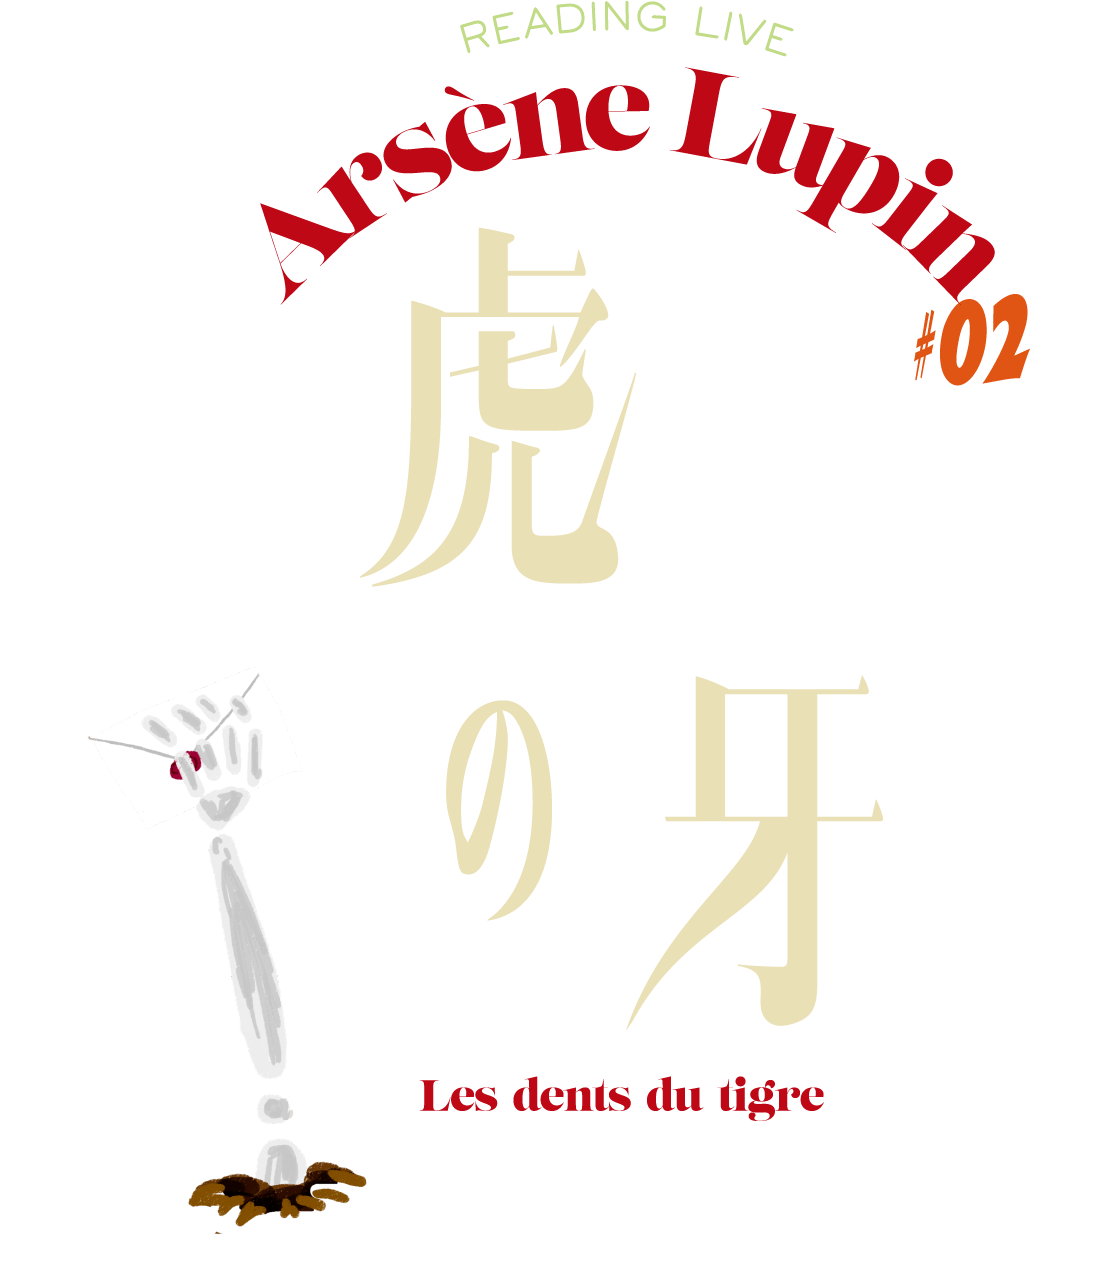 READING LIVE Arsène Lupin #02 虎の牙 Les dents du tigre